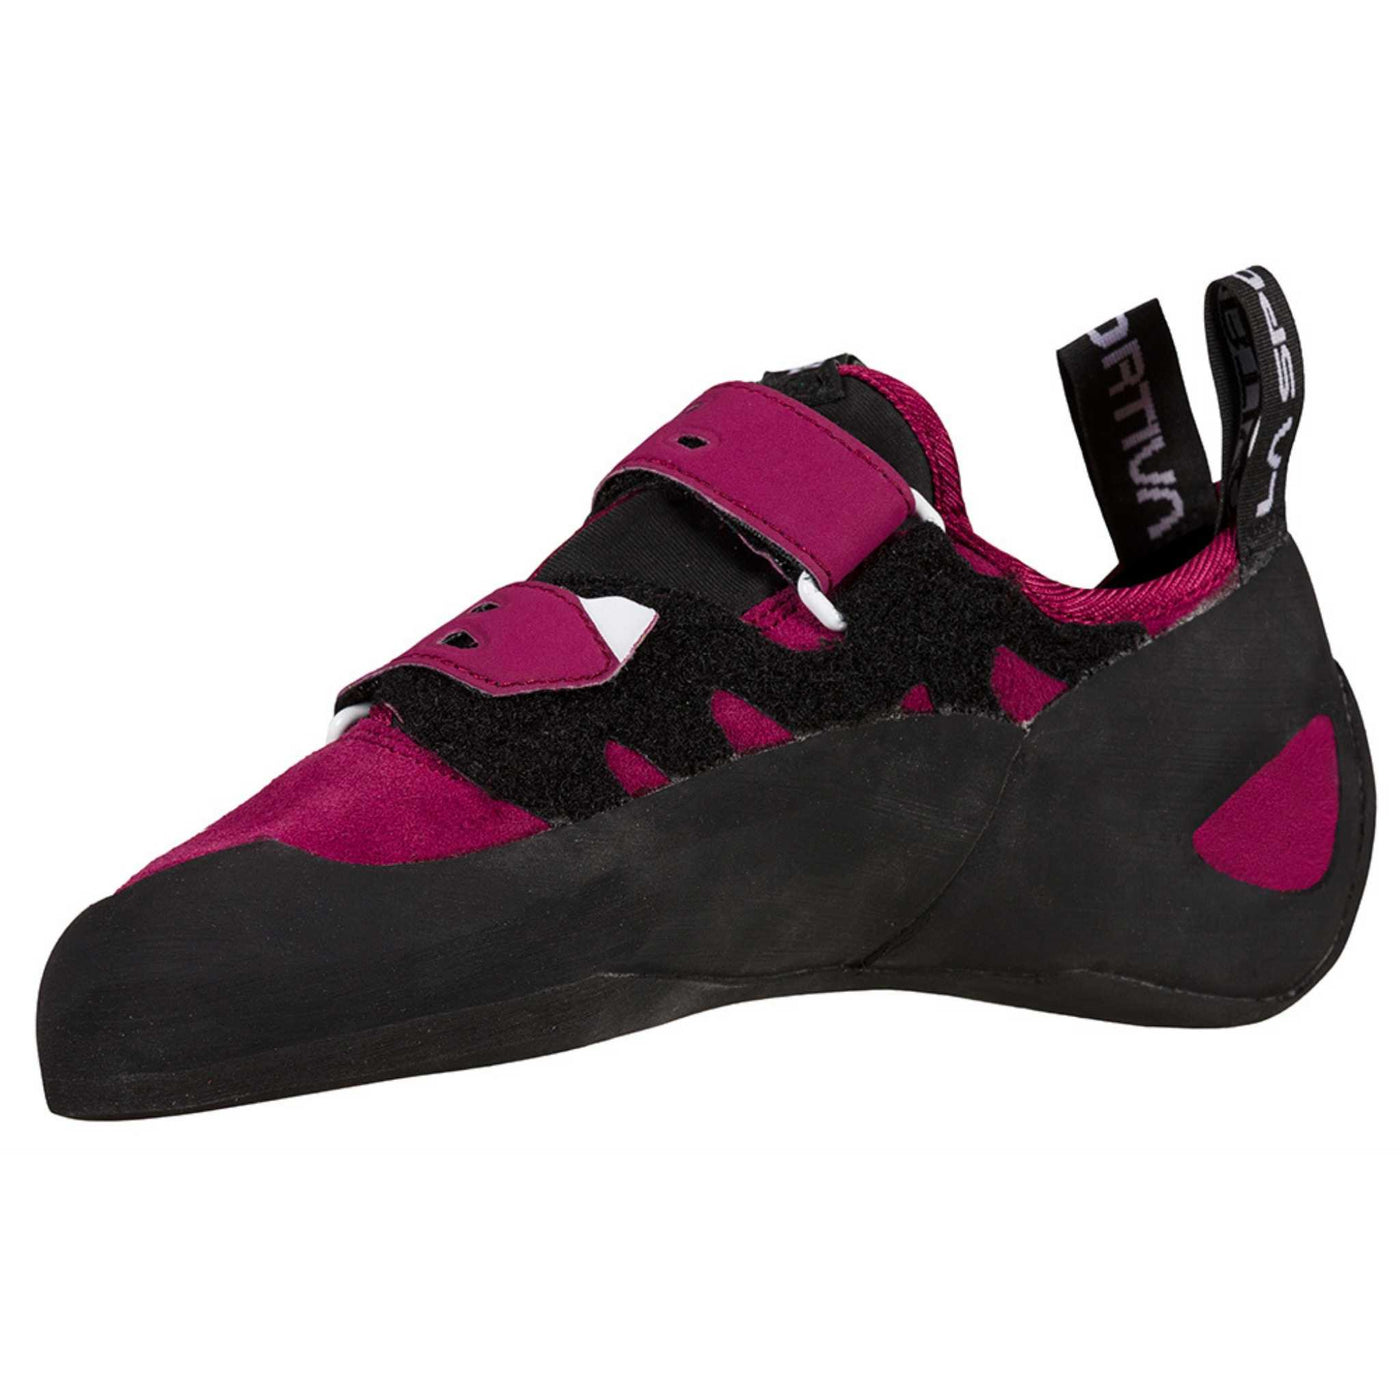 La Sportiva Tarantula - Womens | Rock Climbing Shoe NZ | Further Faster Christchurch NZ #red-plum